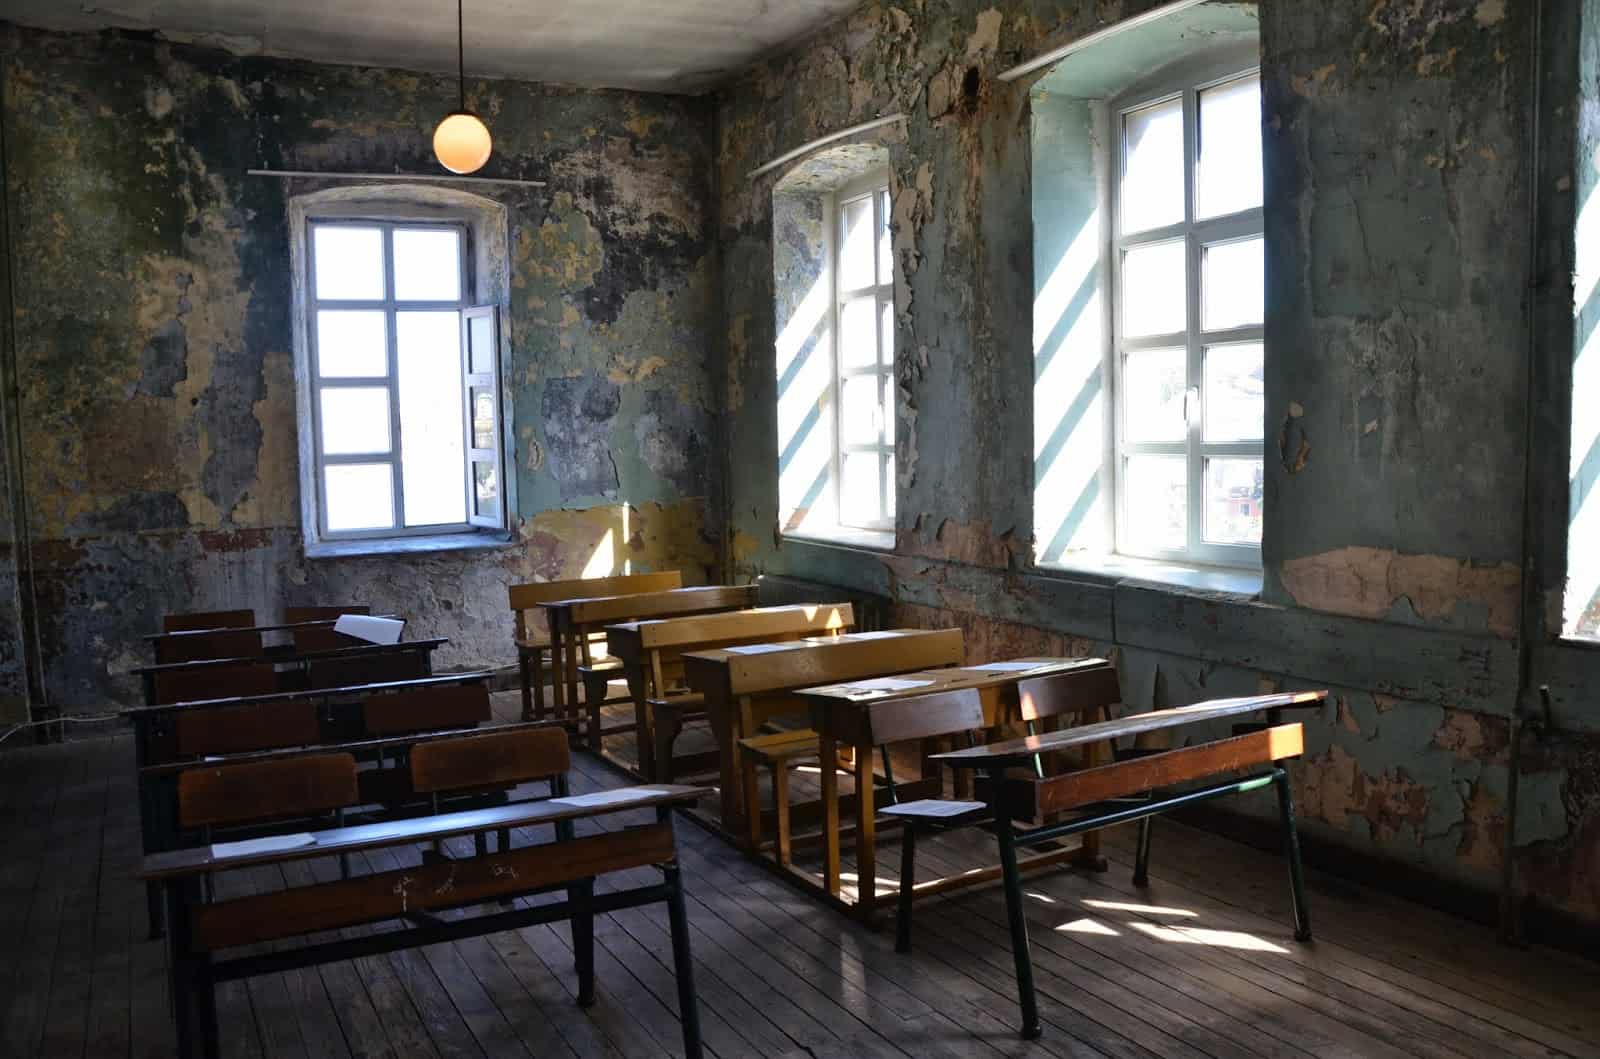 Classroom at Ioakimion School for Girls in Fener, Istanbul, Turkey